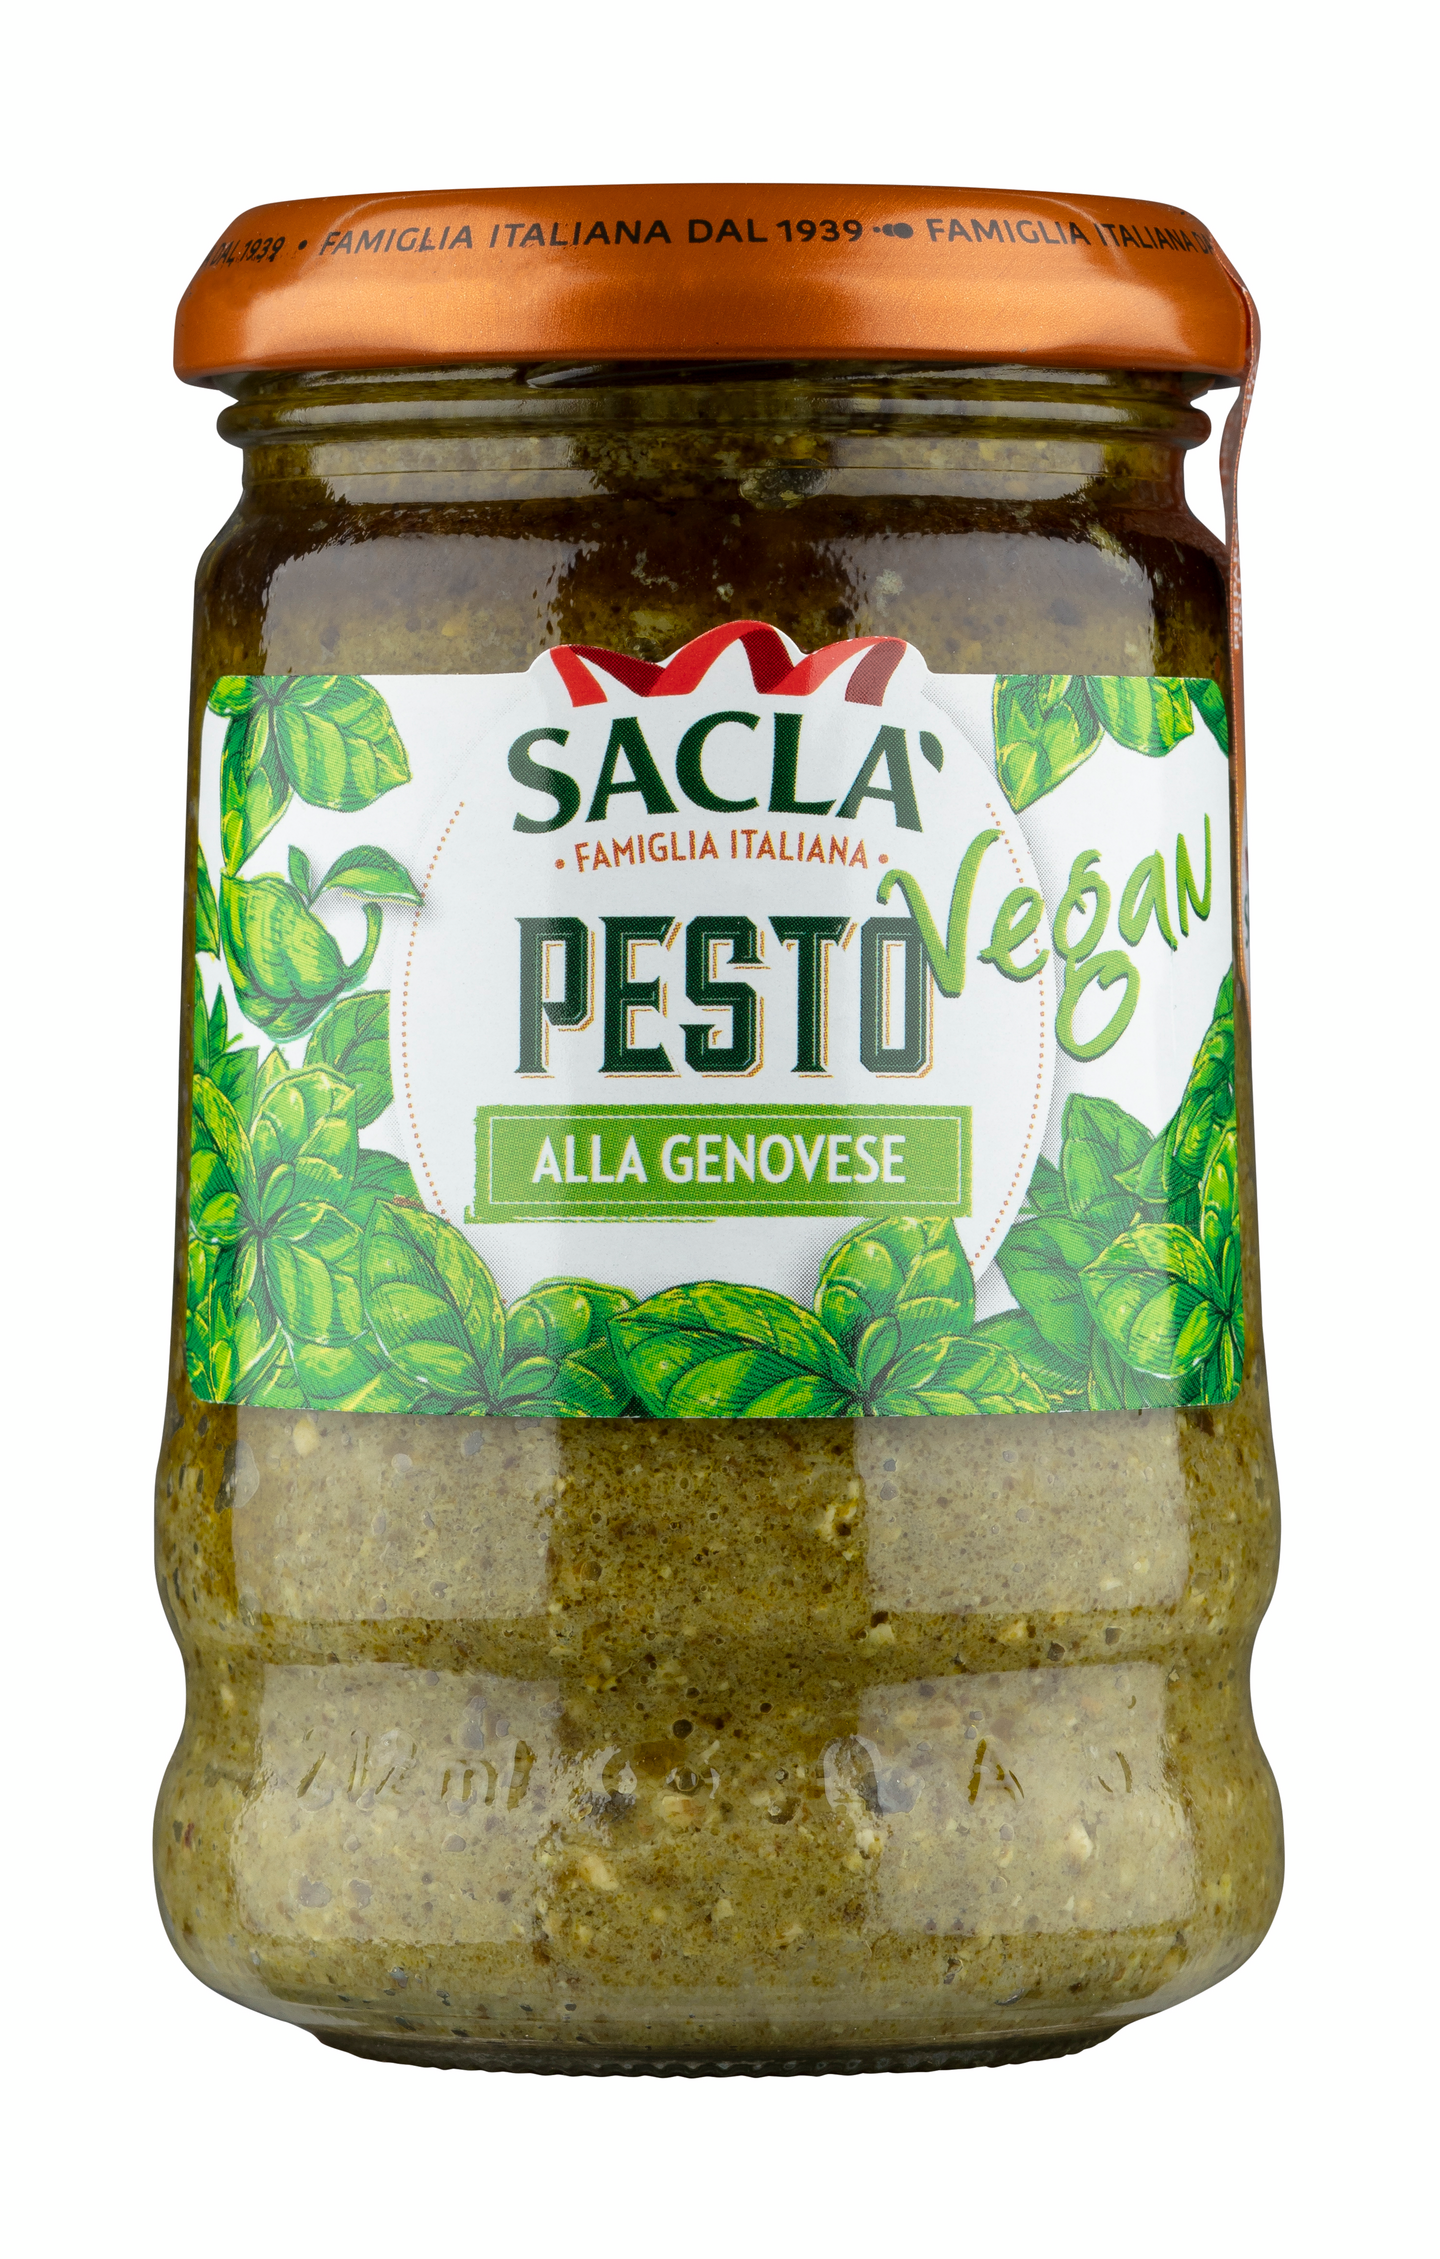 Sacla Vegan Pesto 190g Alla Genovese